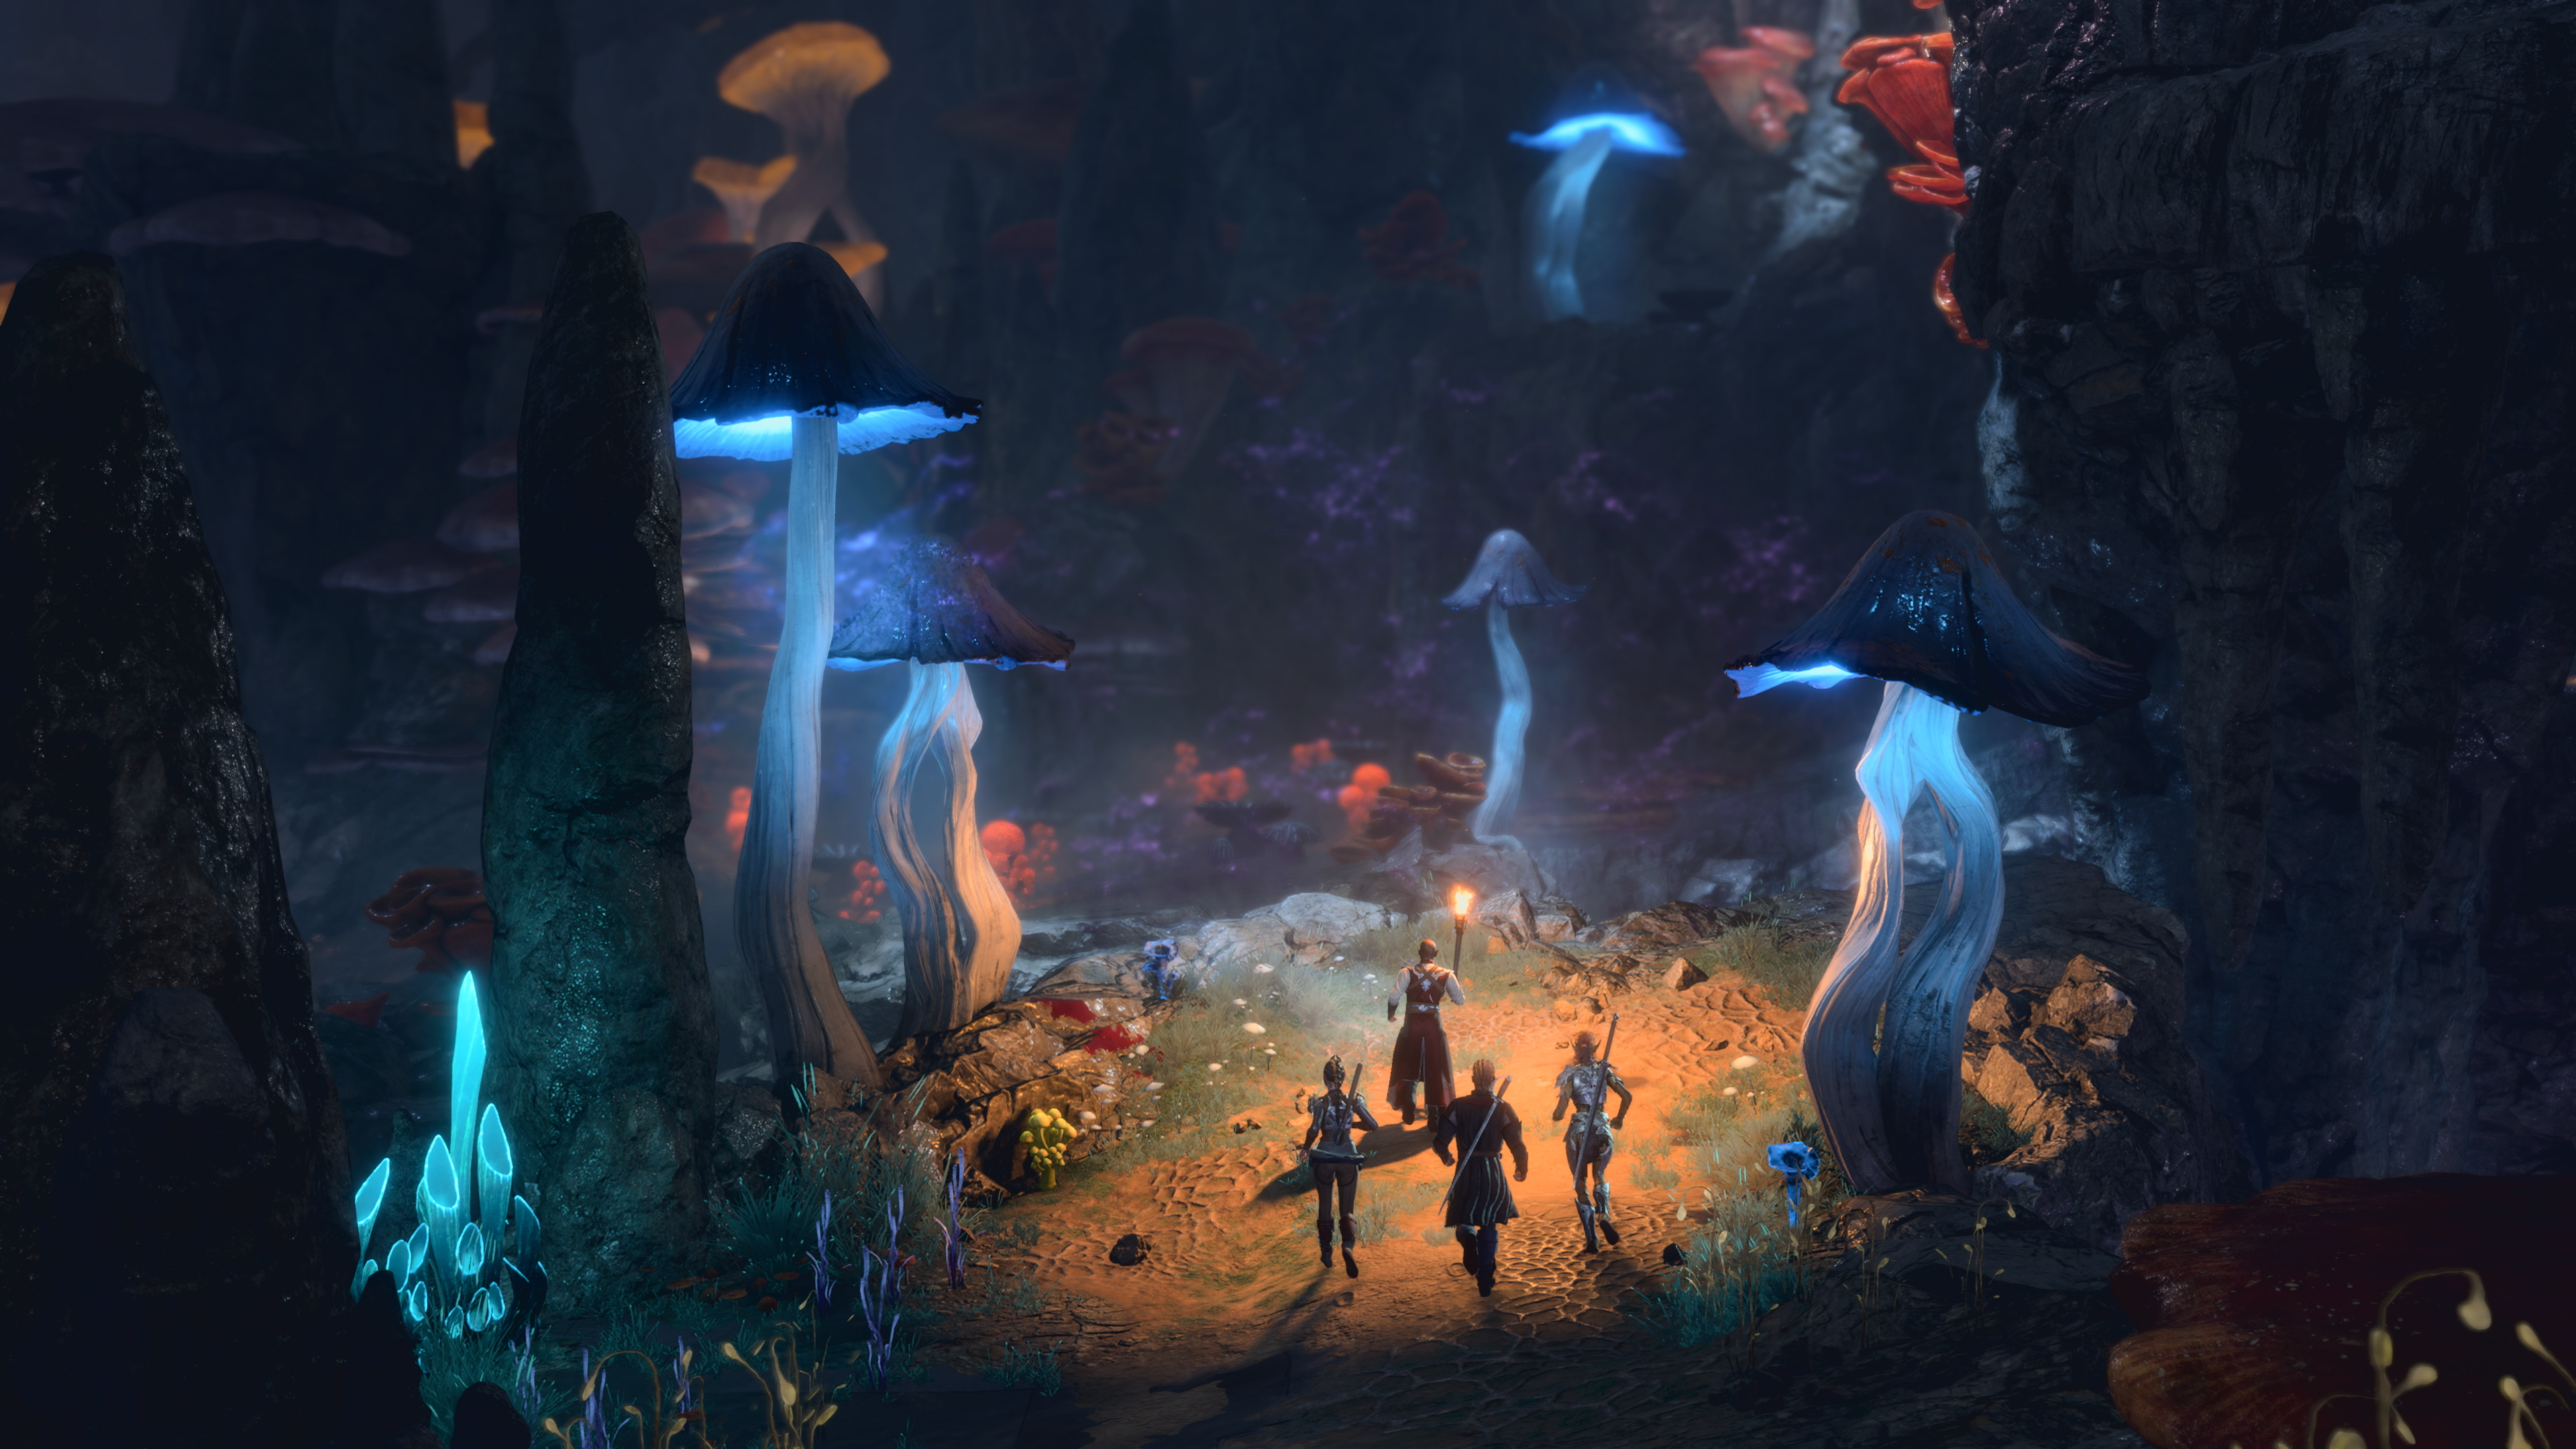 Four Baldur’s Gate 3 characters walk through an area illuminated by oversized blue luminescent mushrooms